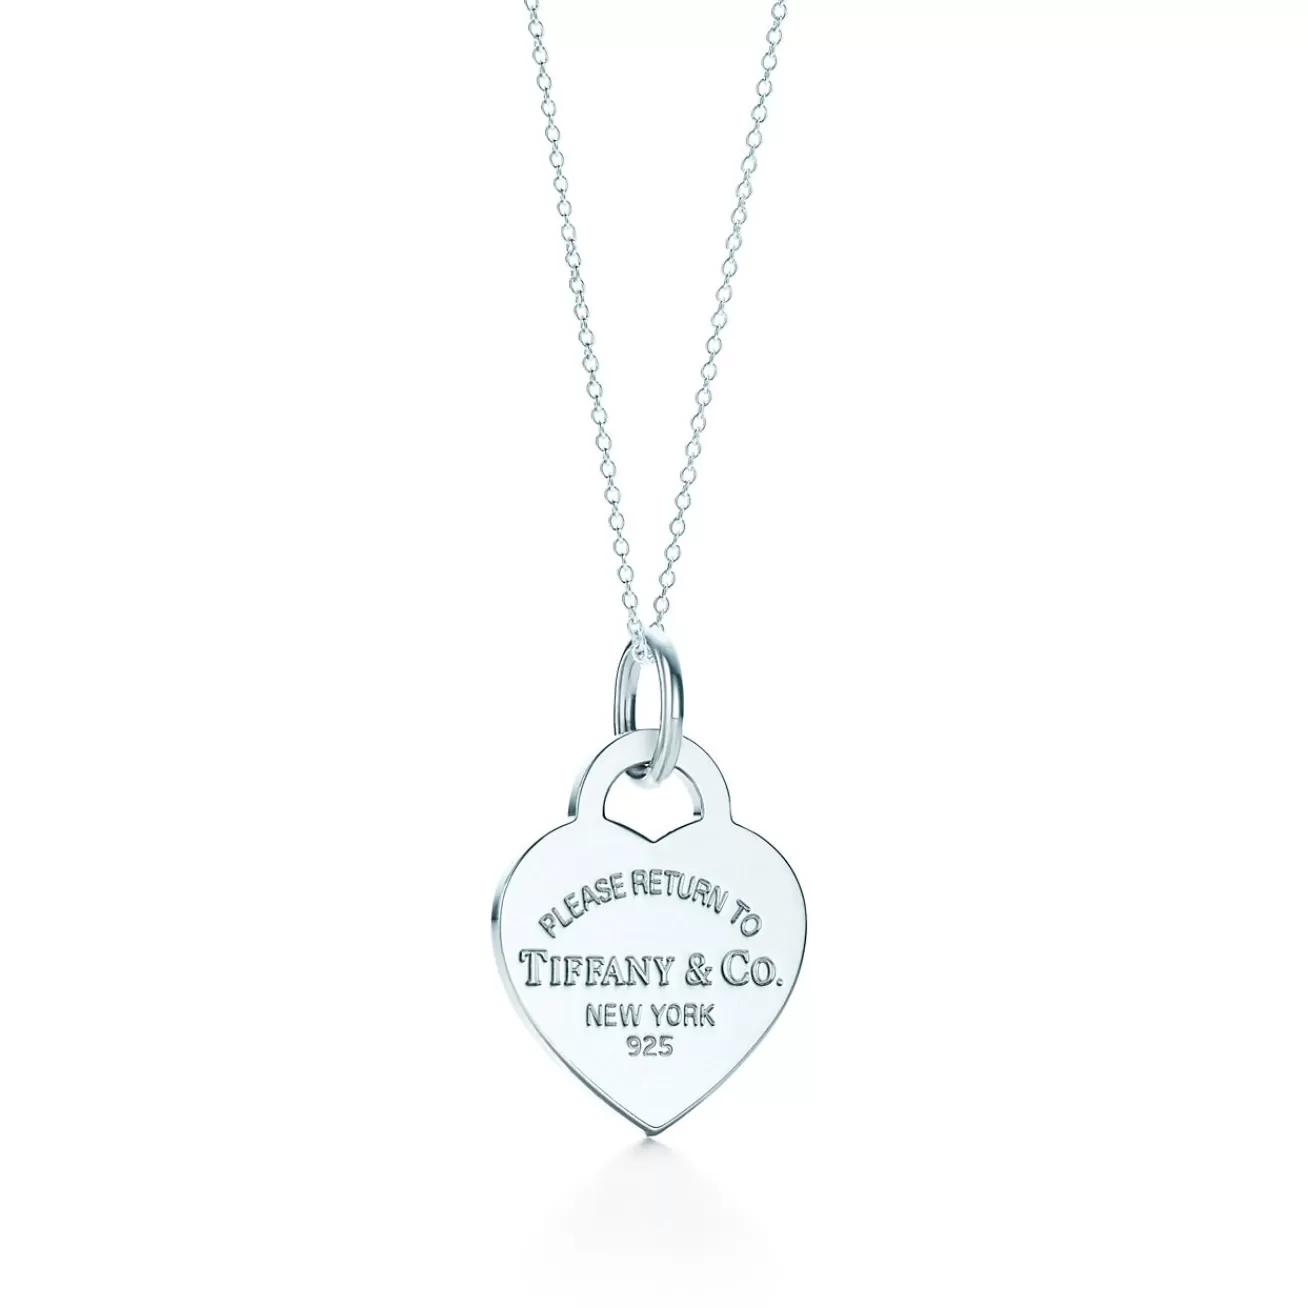 Tiffany & Co. Return to Tiffany® Heart Tag Charm in Silver, Medium | ^ Sterling Silver Jewelry | Return to Tiffany®